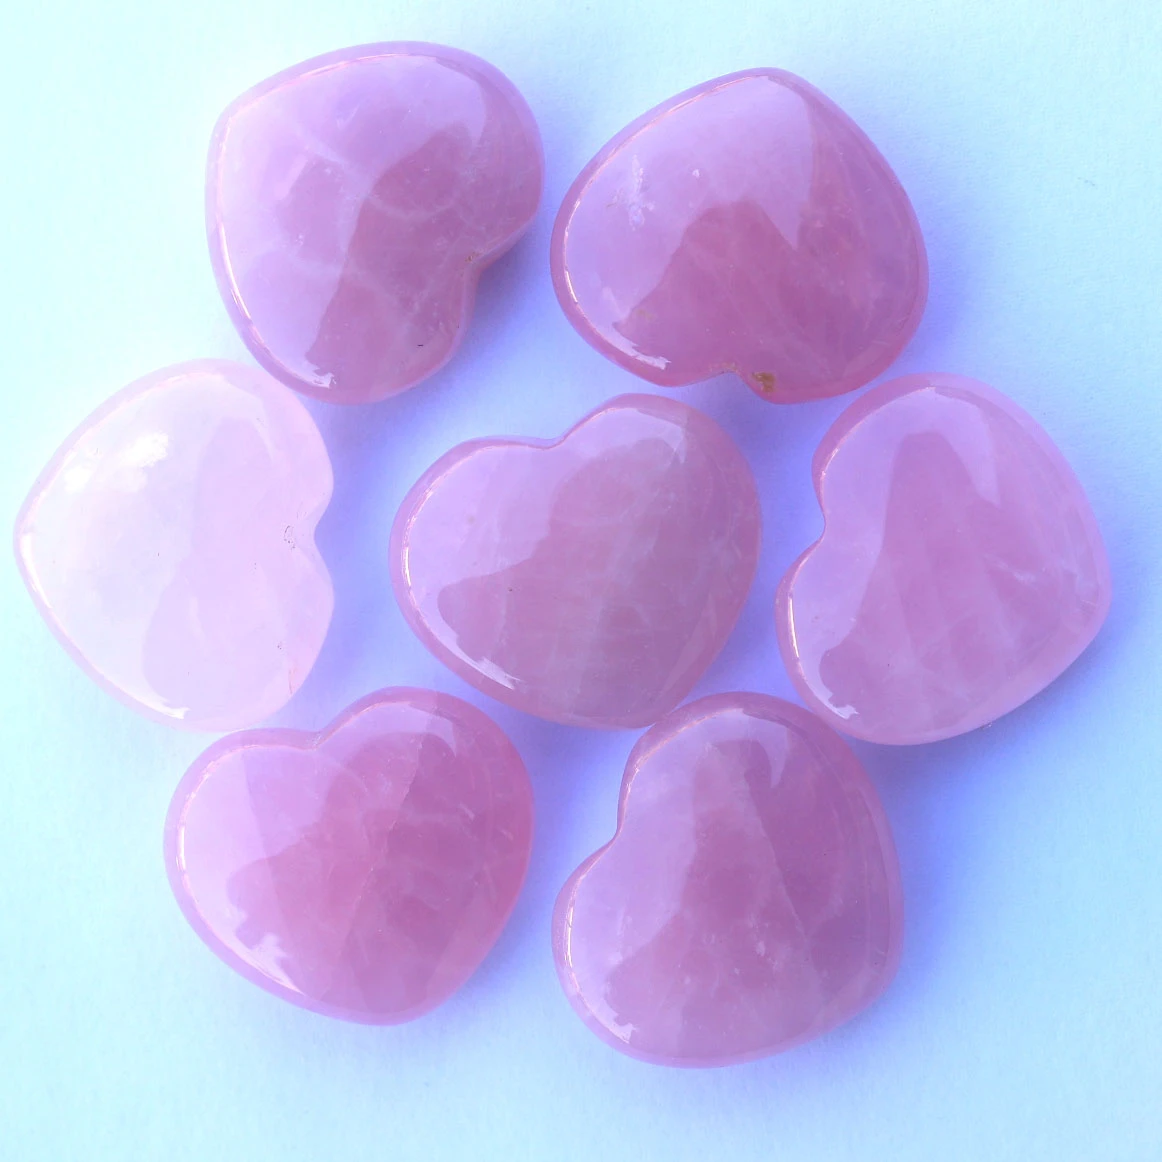 pink heart shaped rose quartz crystal healing chakra stone